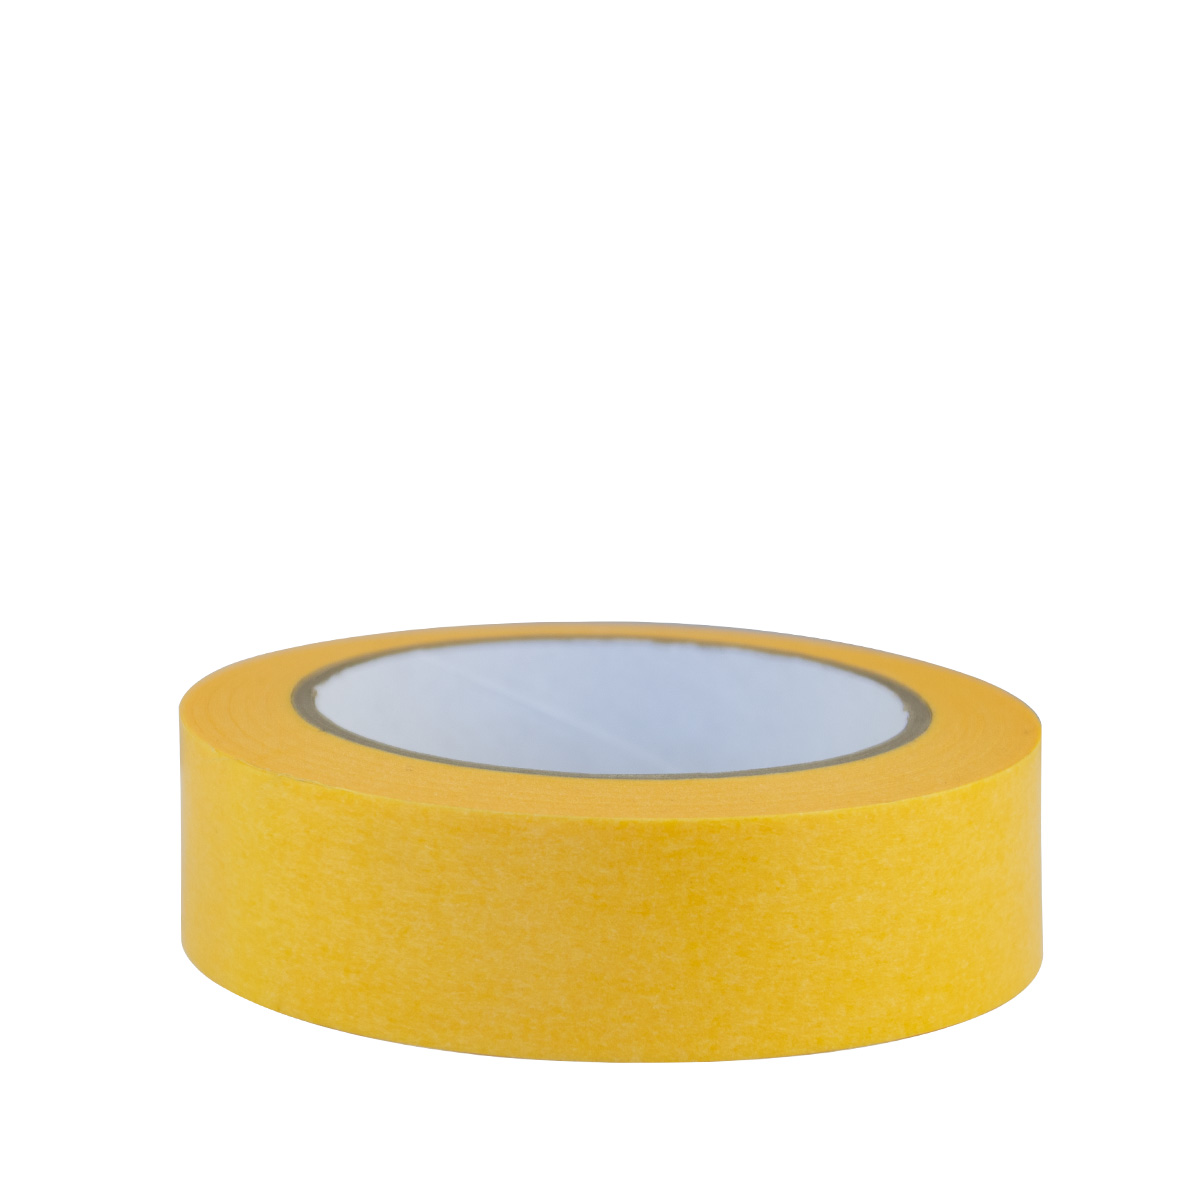 Farbklecks24 Premium Goldband Washi-Tape, 30mmx50m UV90